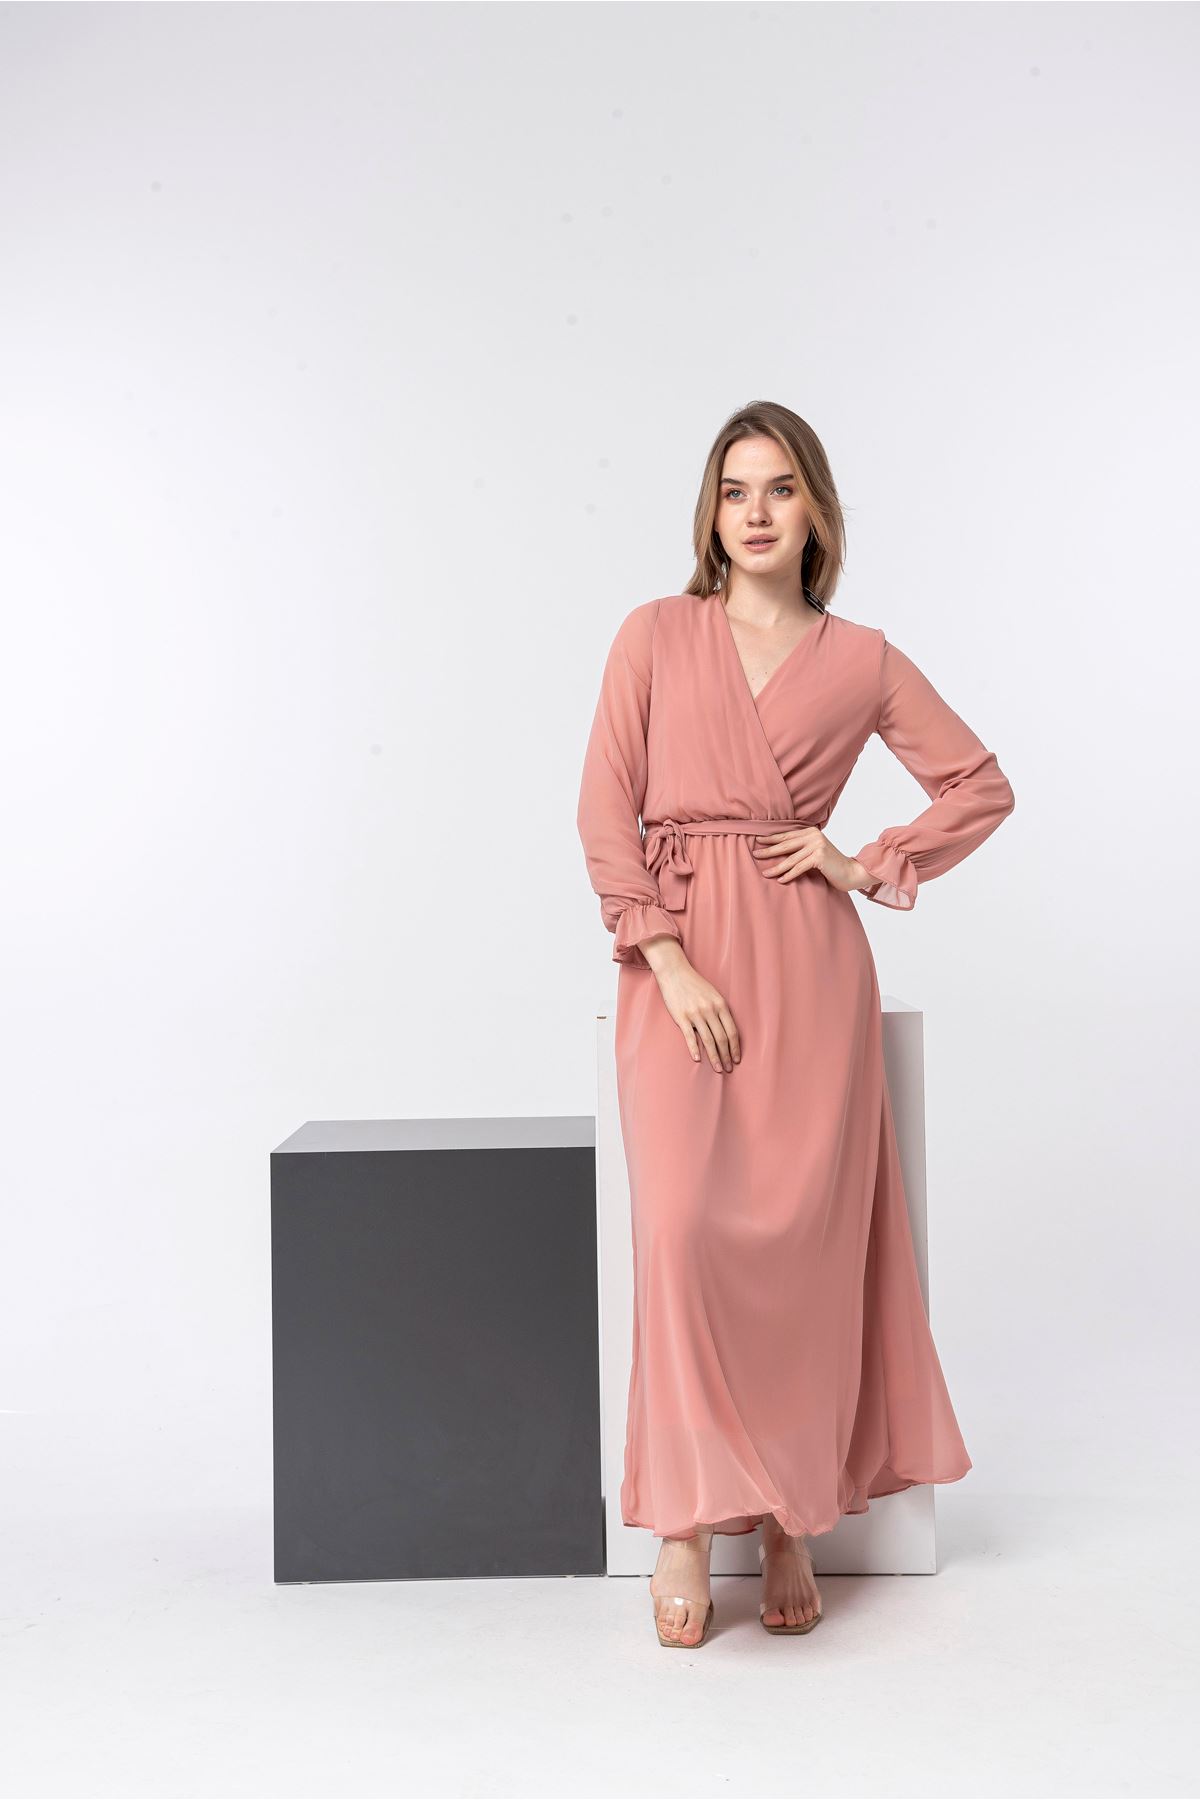 Chiffon Fabric Long Sleeve V-Neck Long Laced Women Dress - Light Pink